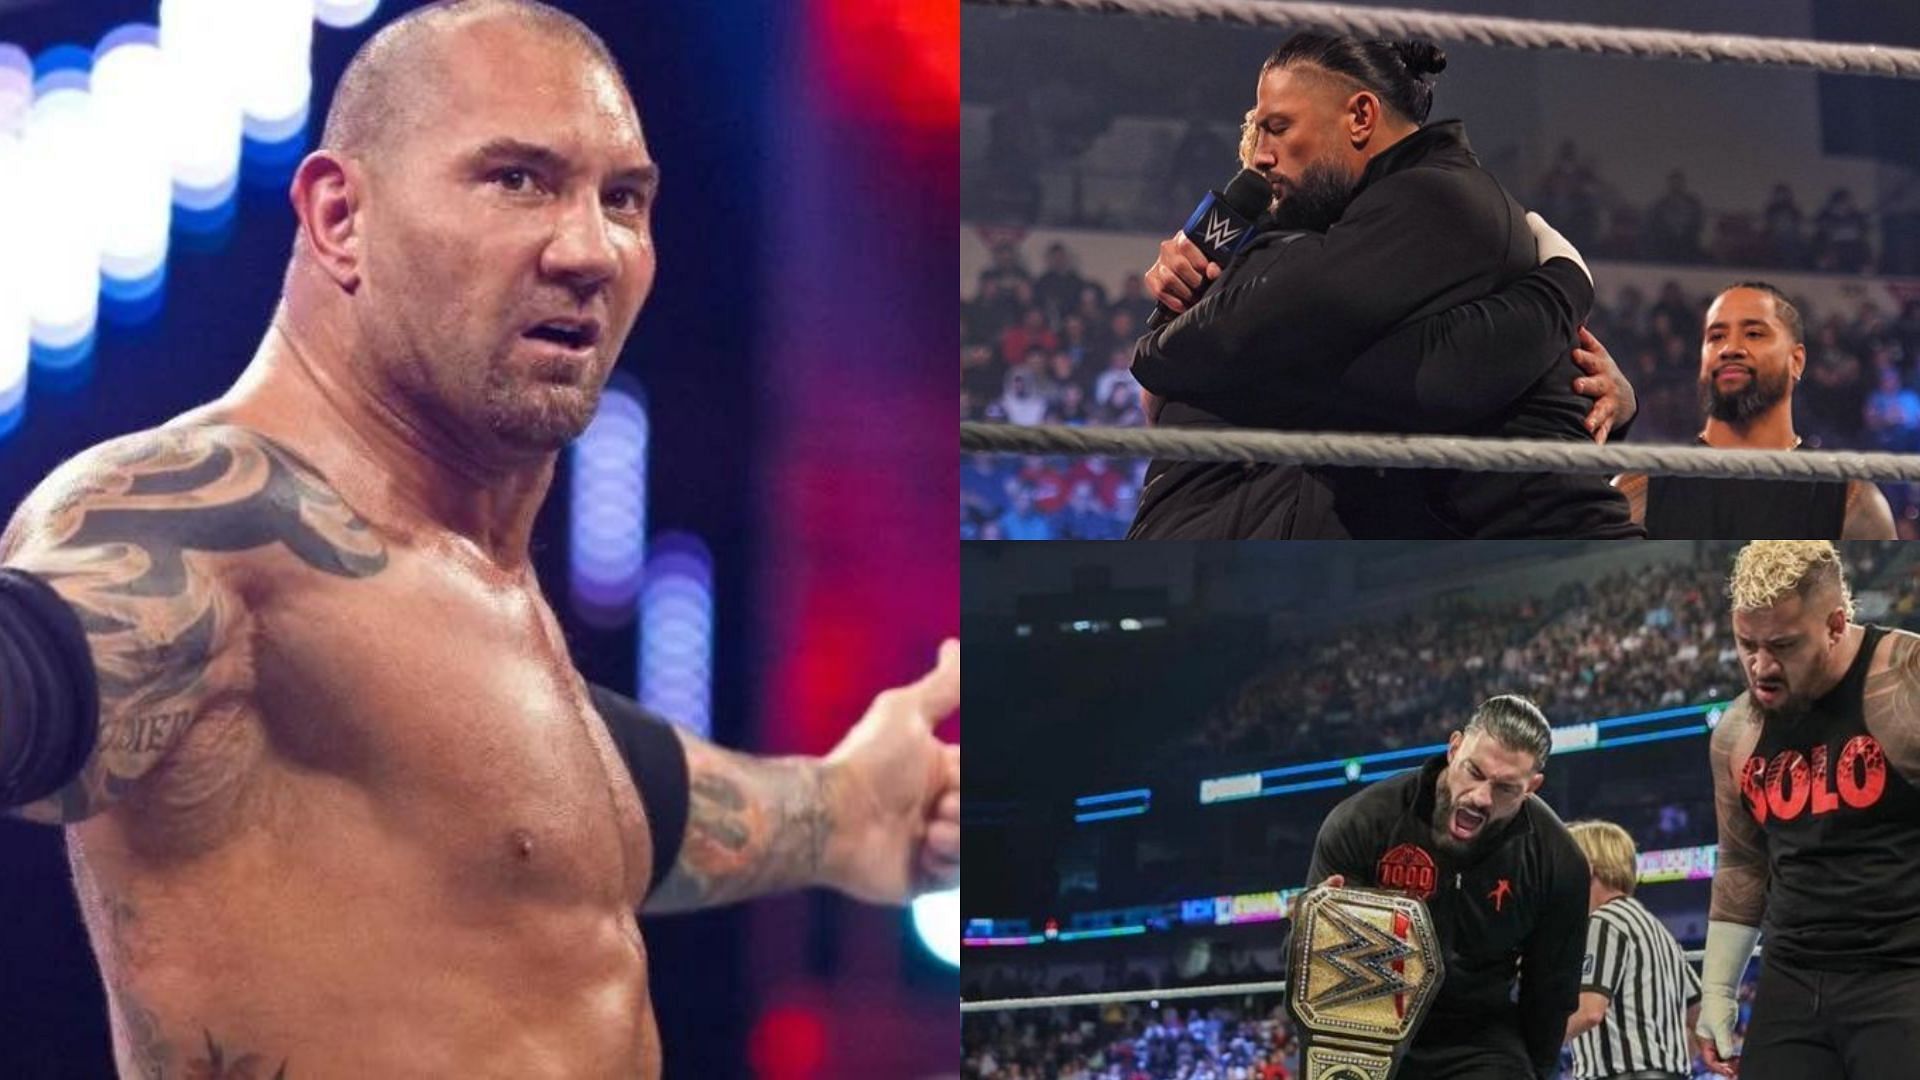 Batista sent a message to a Bloodline member on social media